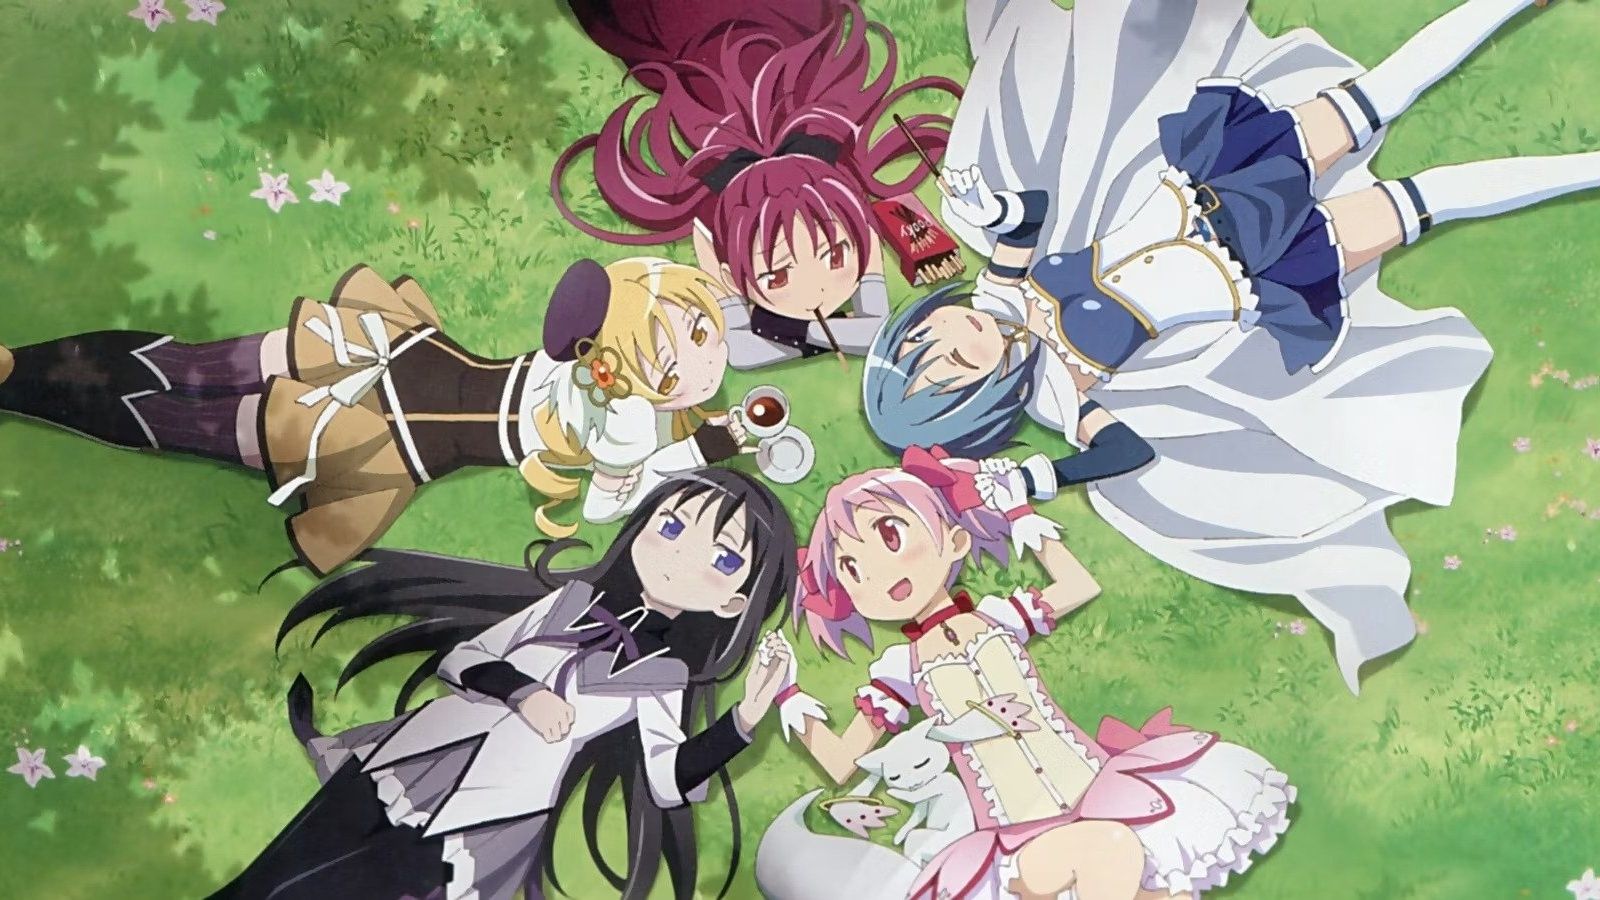 The main cast of Puella Magi Madoka Magica, lying on a grassy field facing the sky